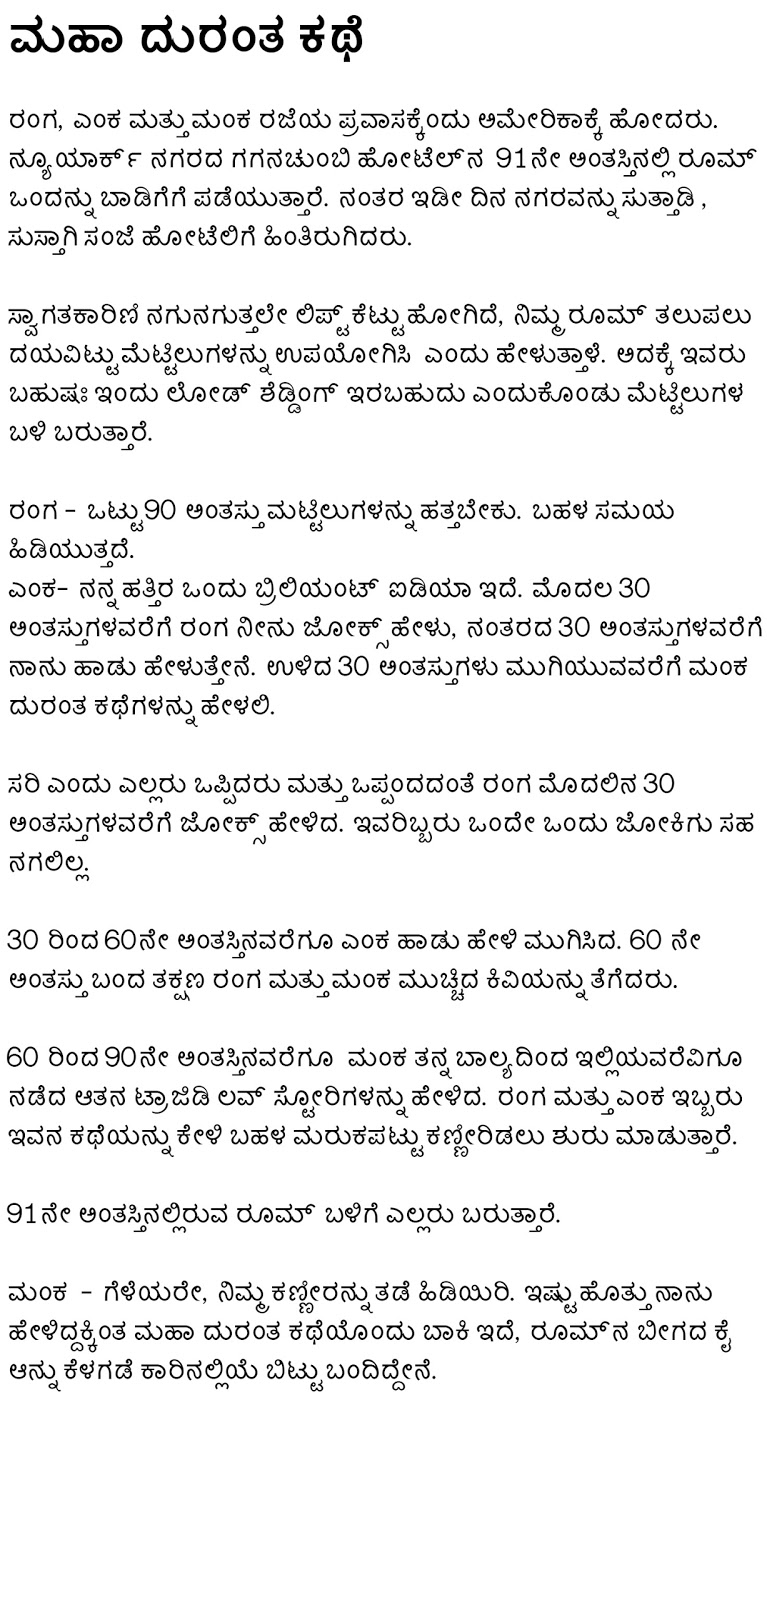 Kannada Online Stories: June 2012